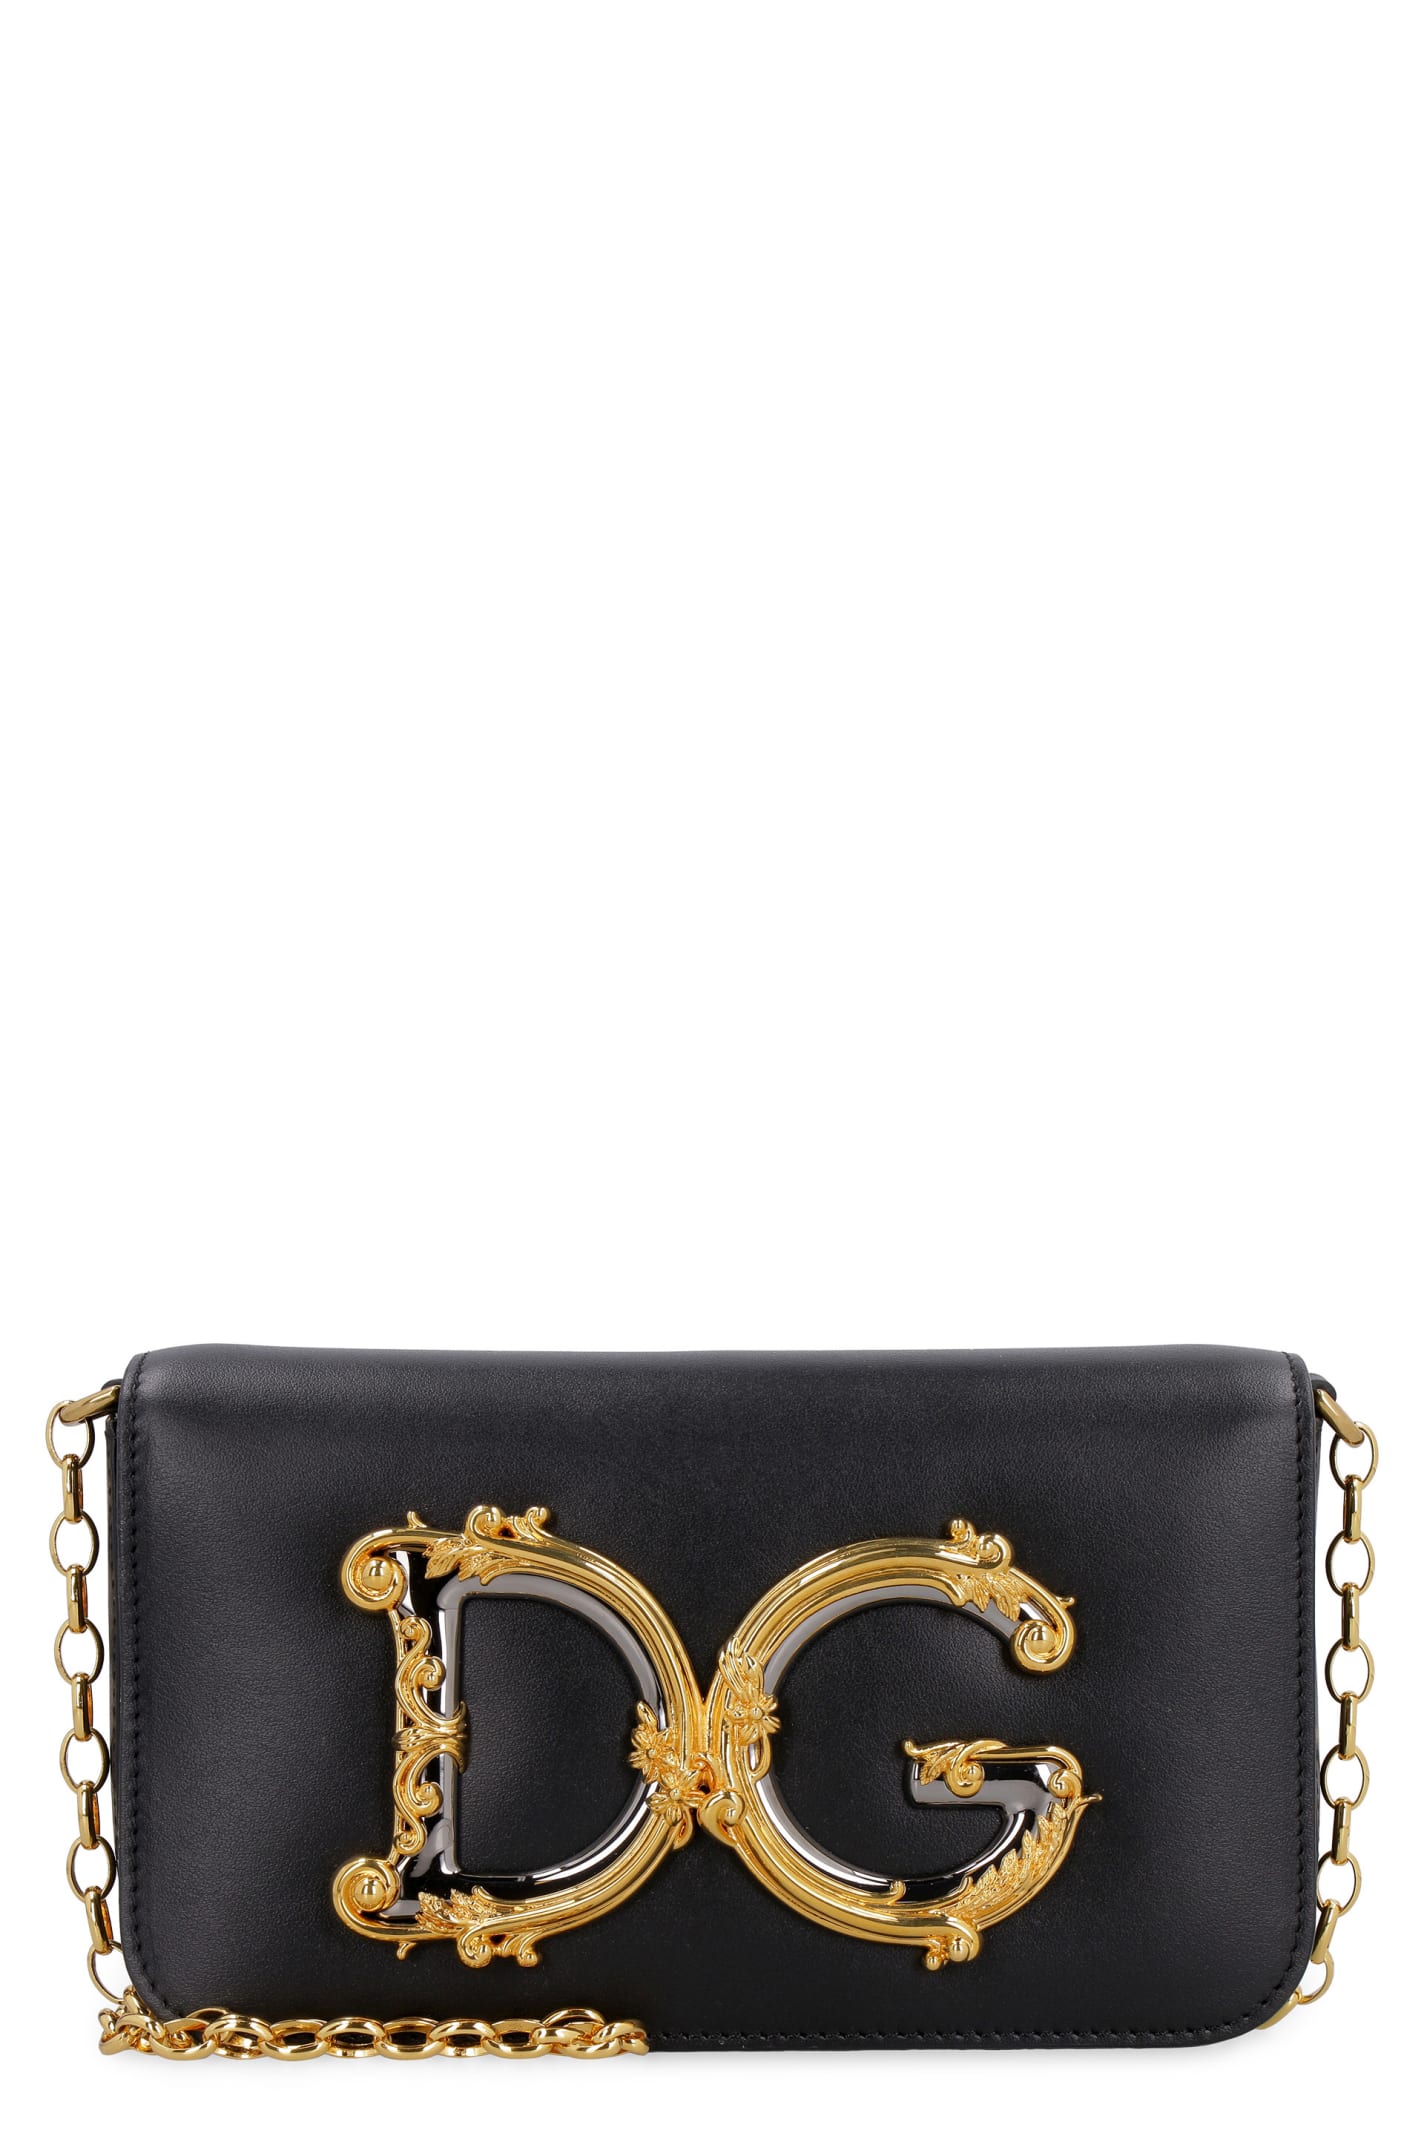 Dolce & Gabbana Dg Girls Leather Crossbody Bag In Black